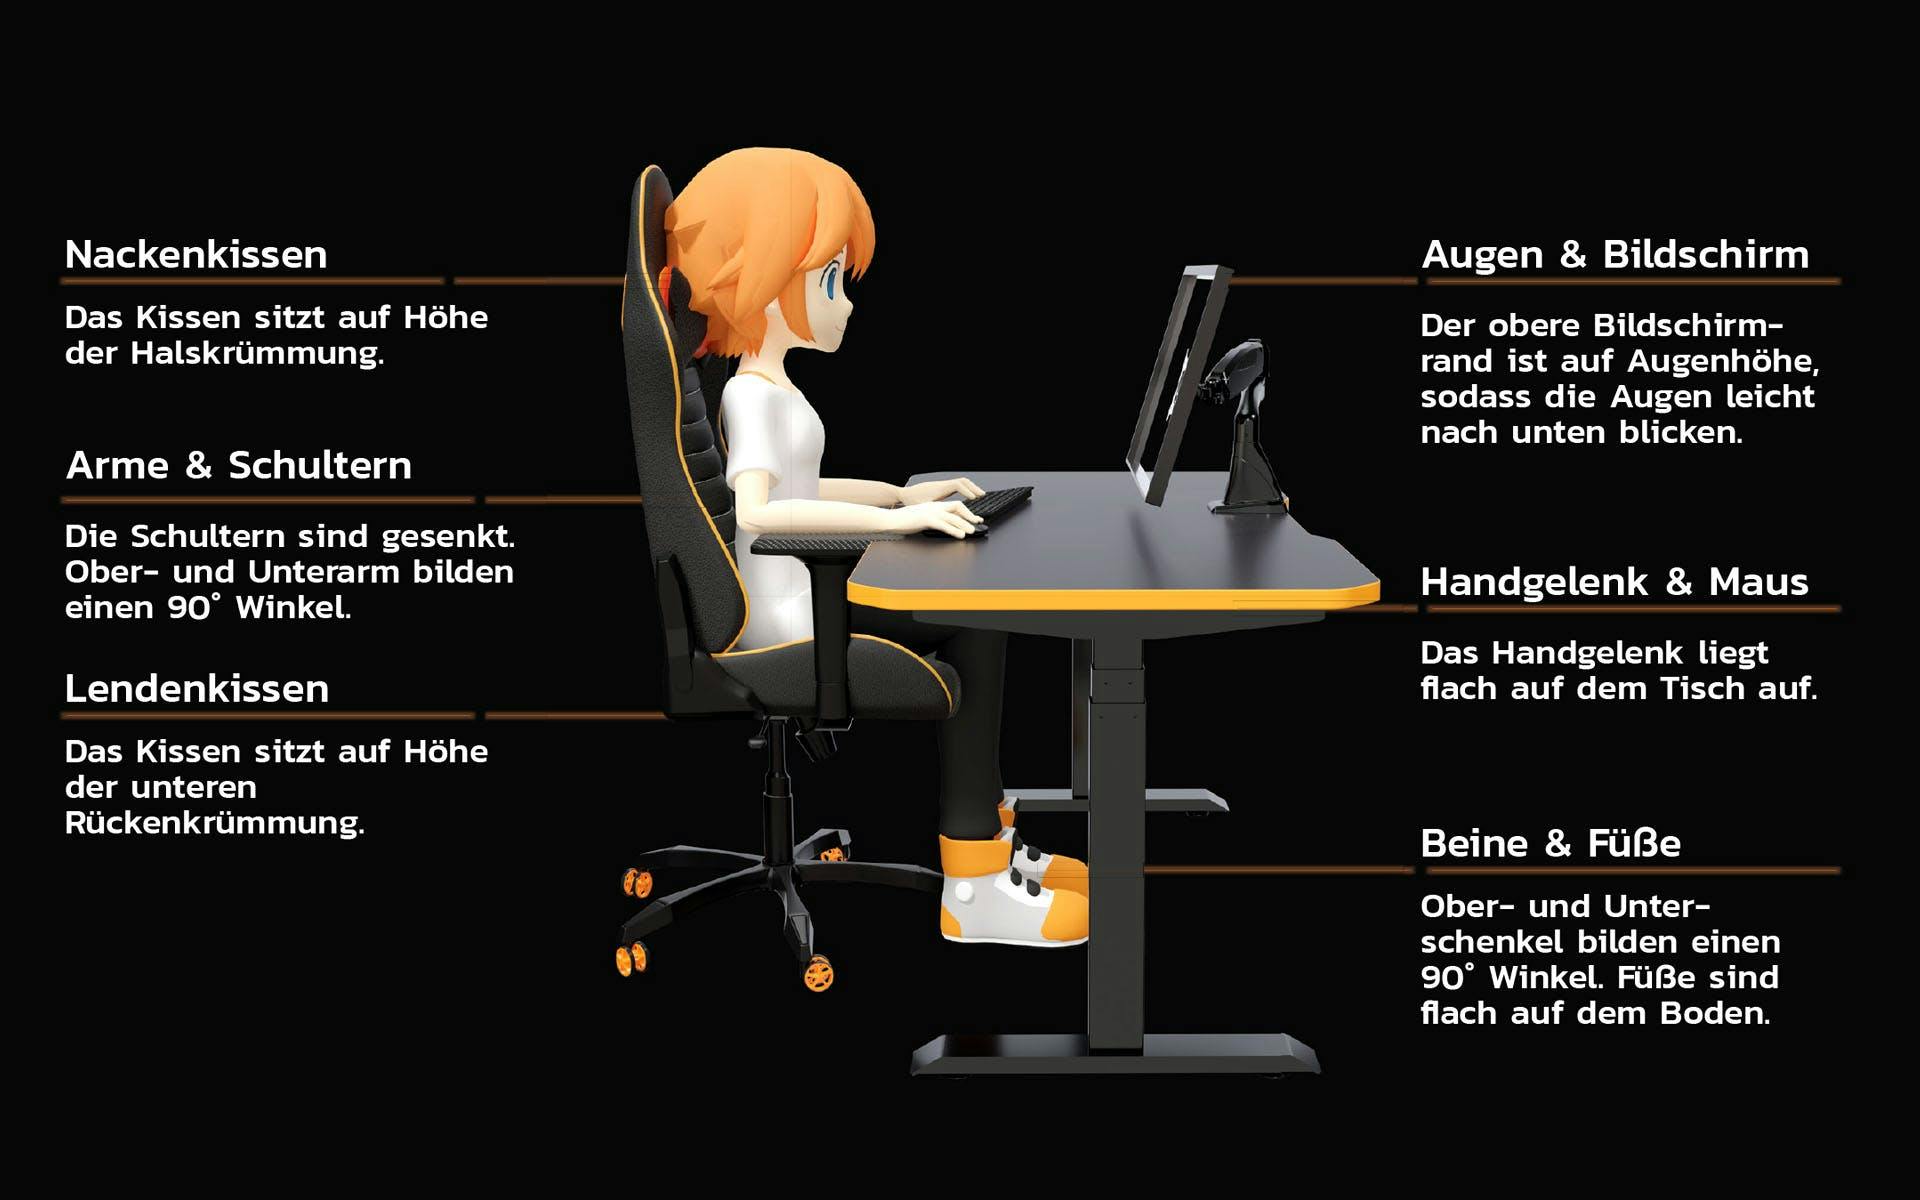 Ergonomic sitting at the computer infographic